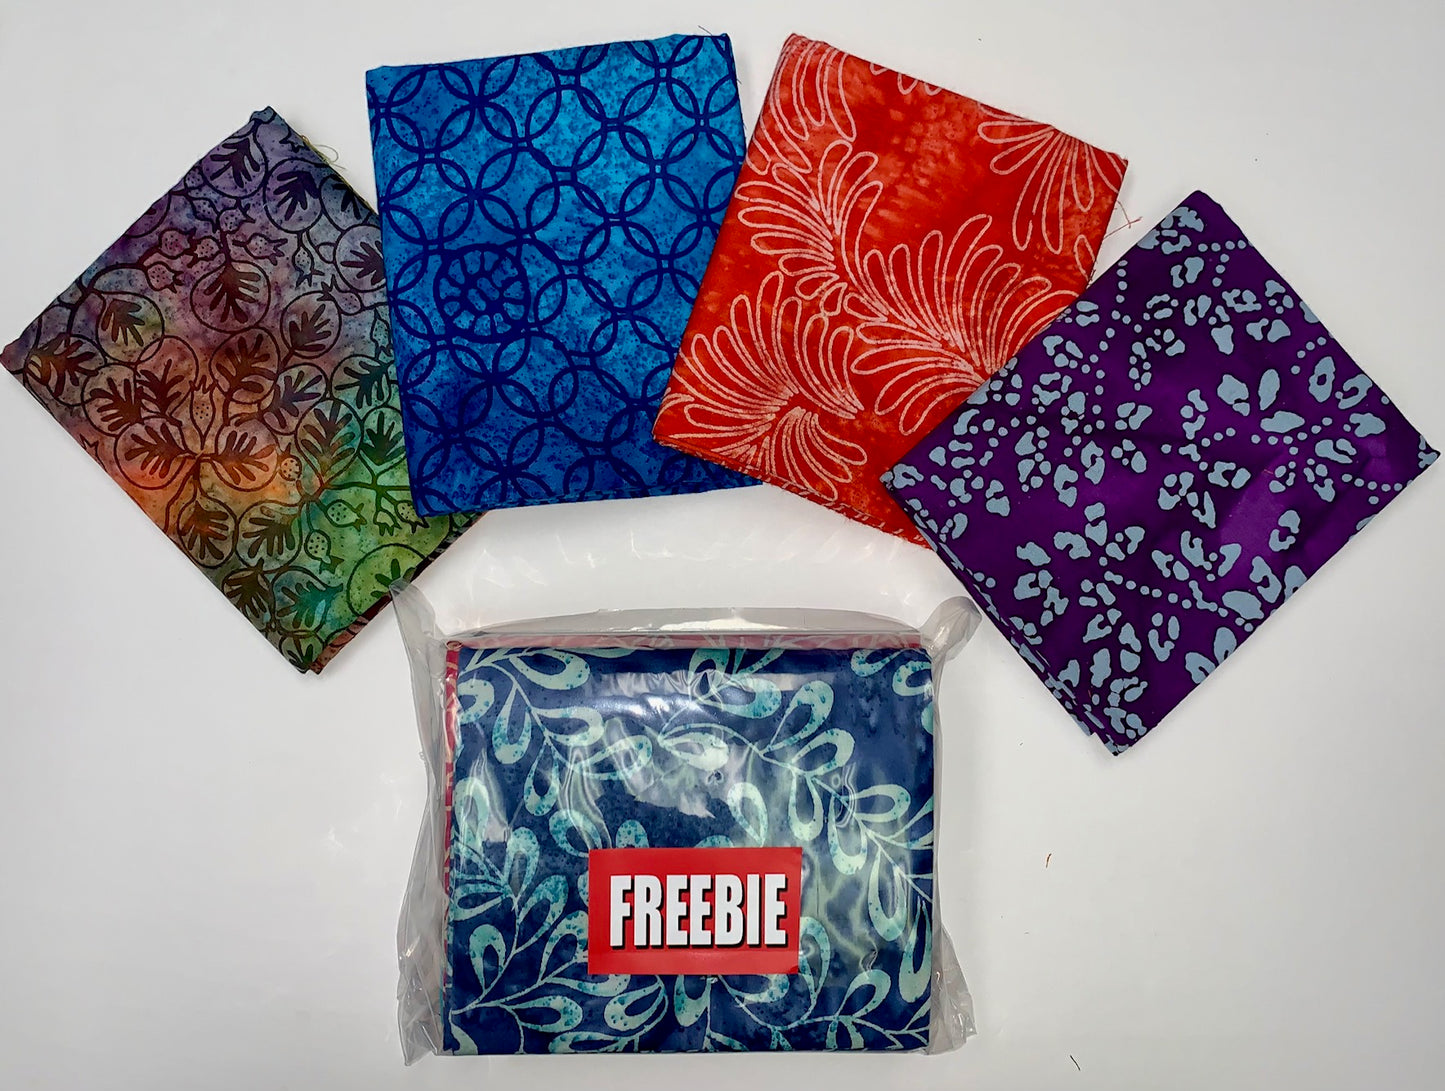 (Promo Now Over) Batik Freebie Bonus With Robert Kaufman Artisan Batik Roll-ups!